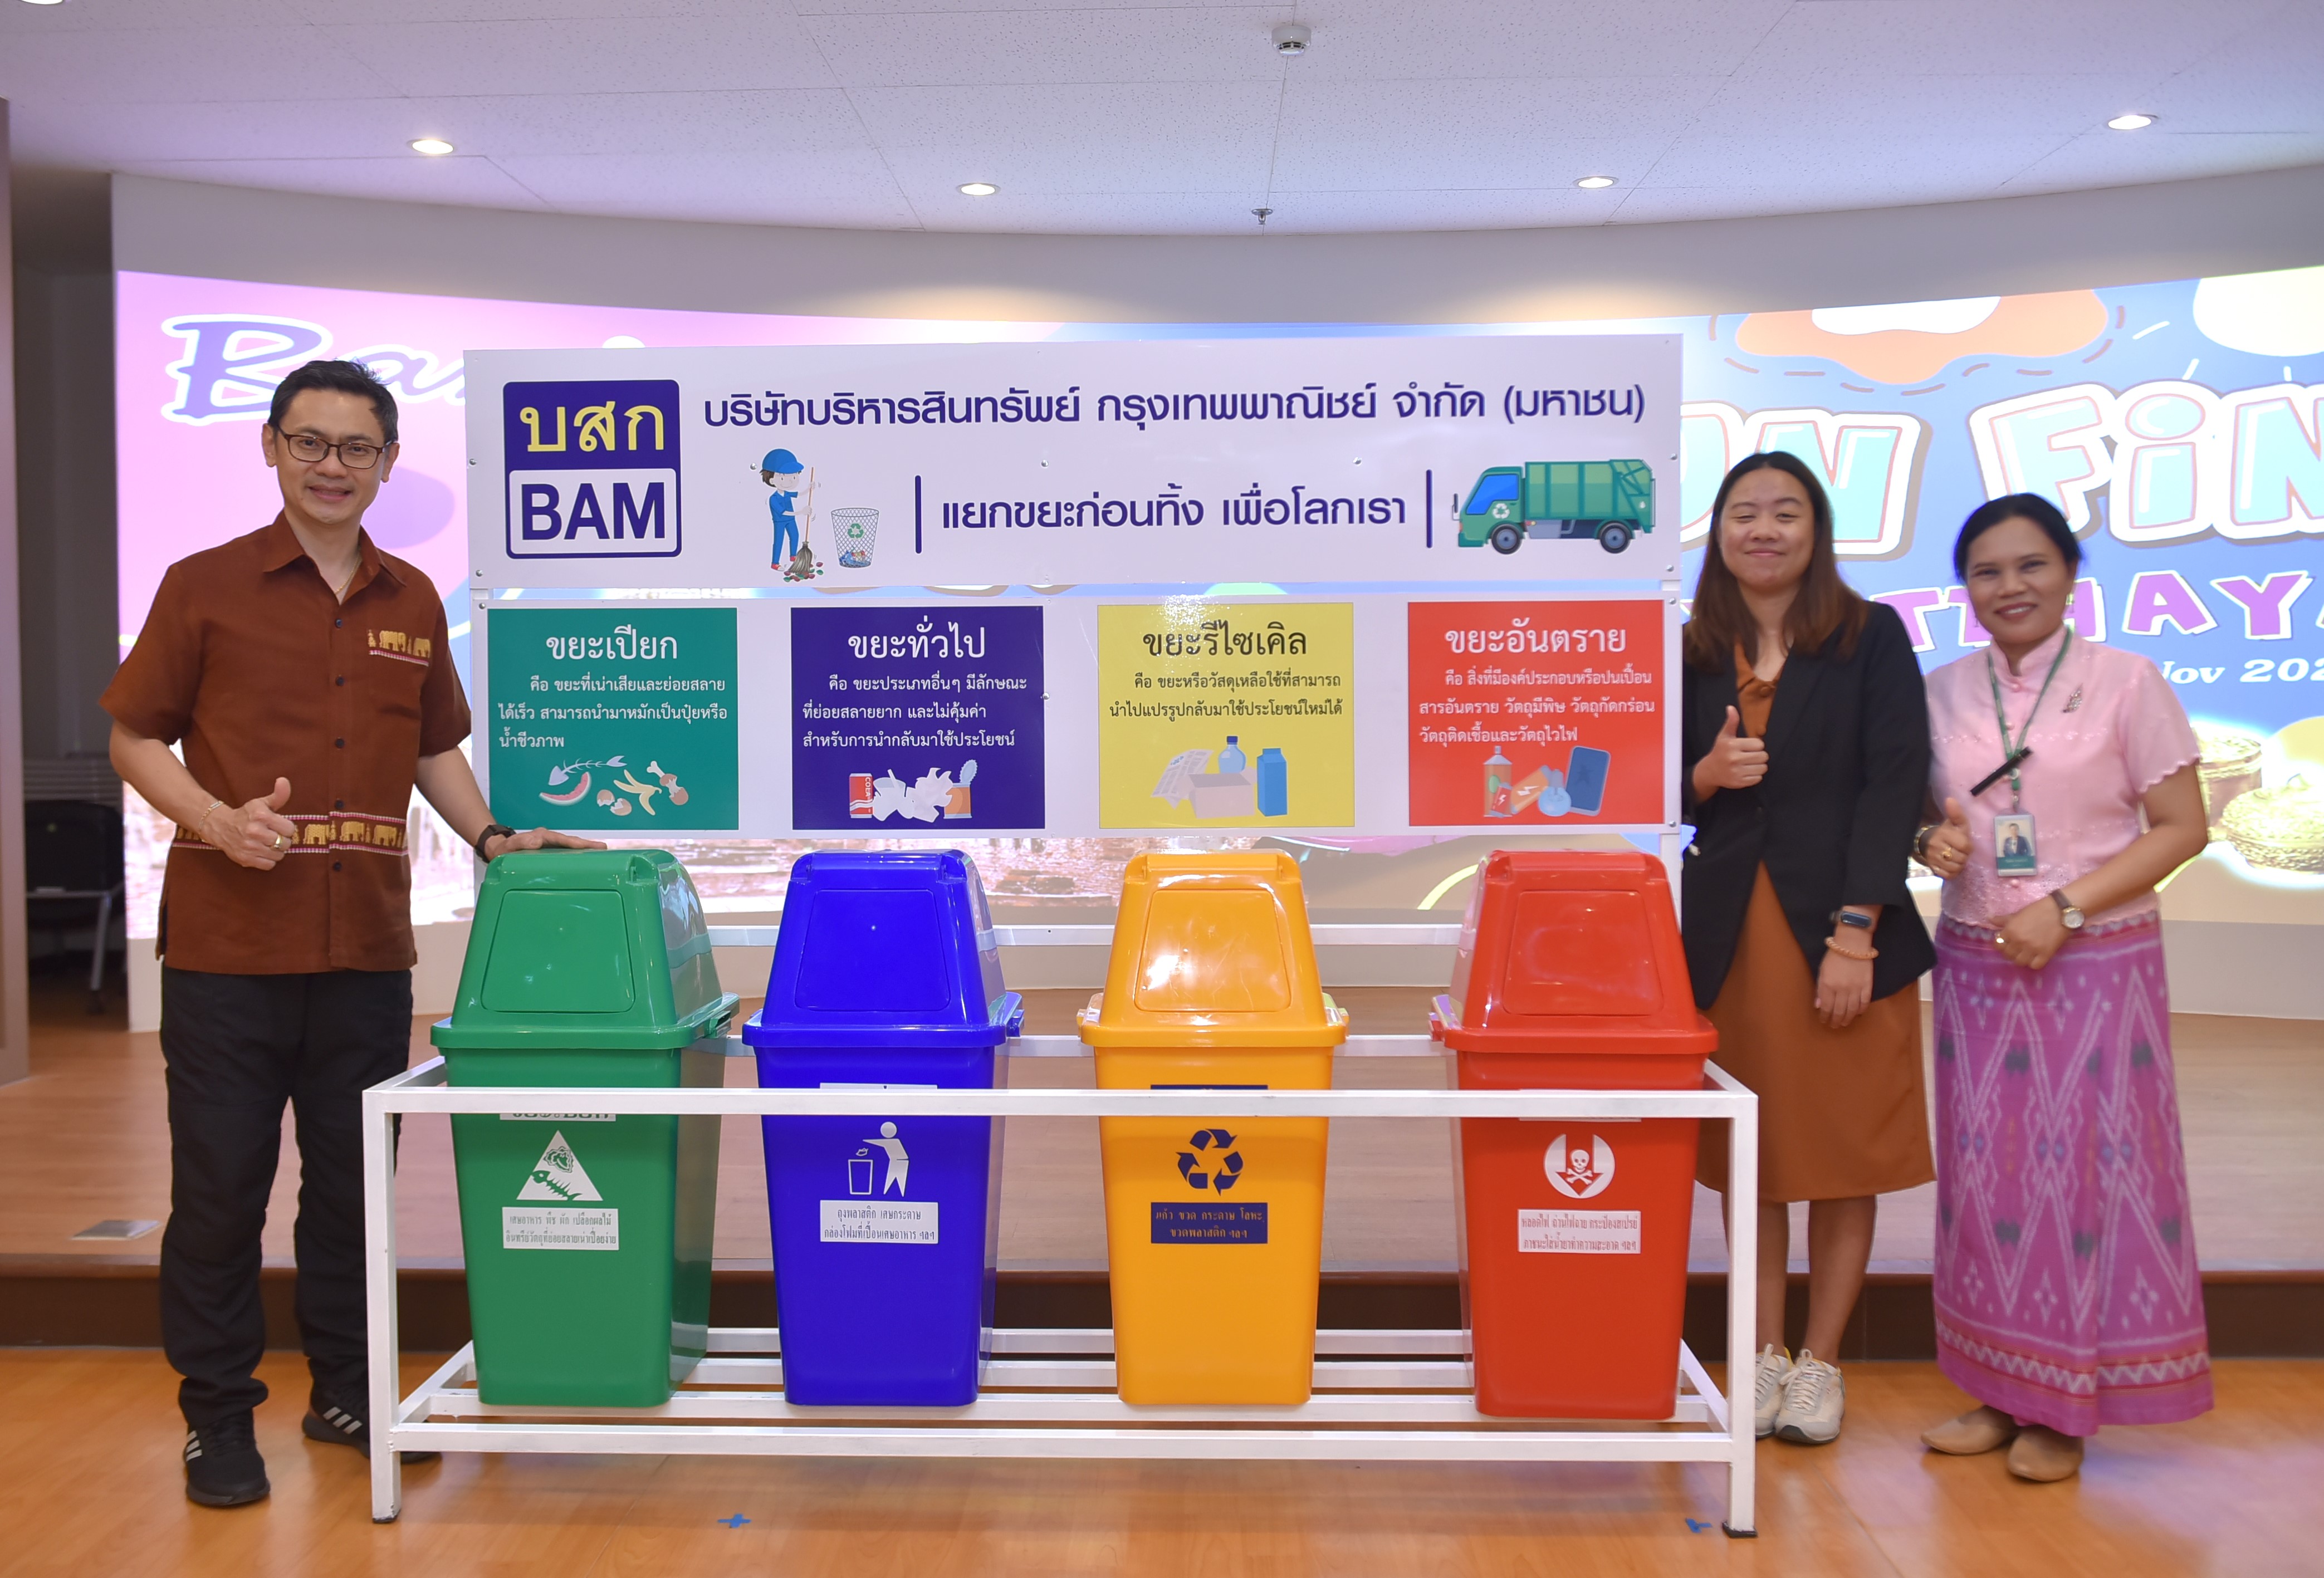 BAM จัดงาน “ BAM’s Trip Fans Fun Fin Check in @Ayutthaya ” พร้อมมอบชุดถังขยะแยกประเภท ช่วยลดโลกร้อน